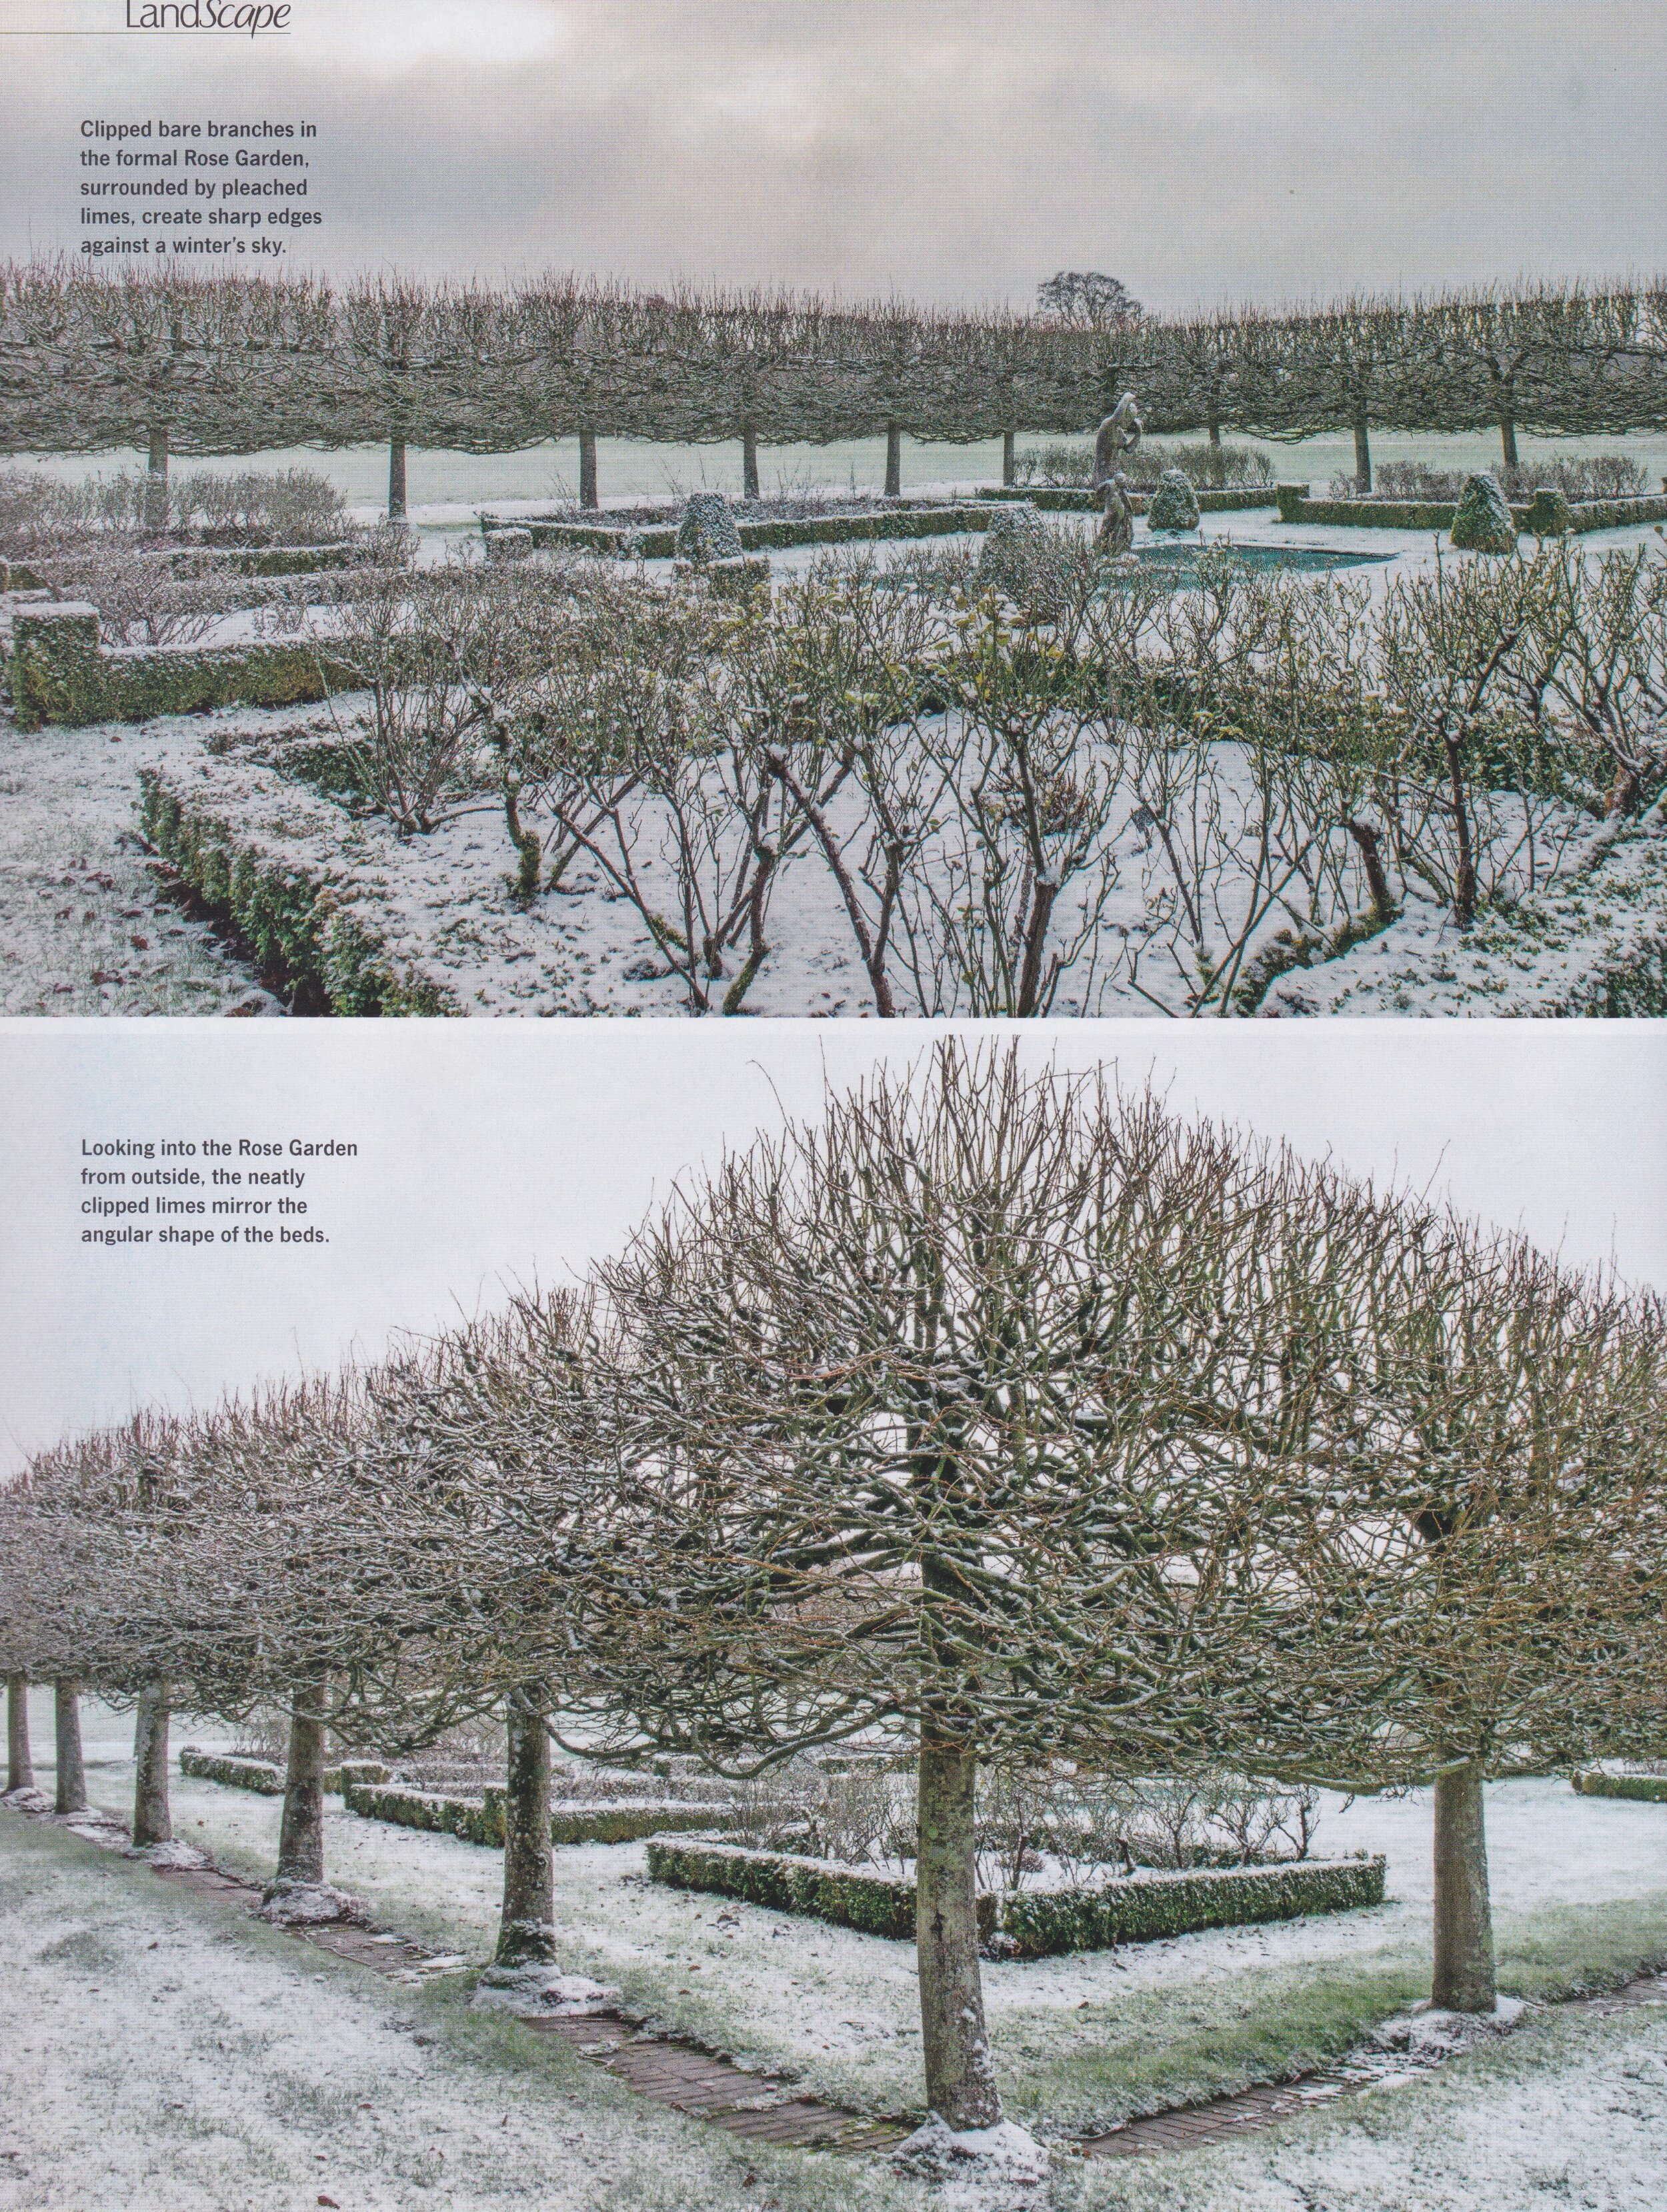 Landscape - Yarlington-5 - Jan 2020.jpeg